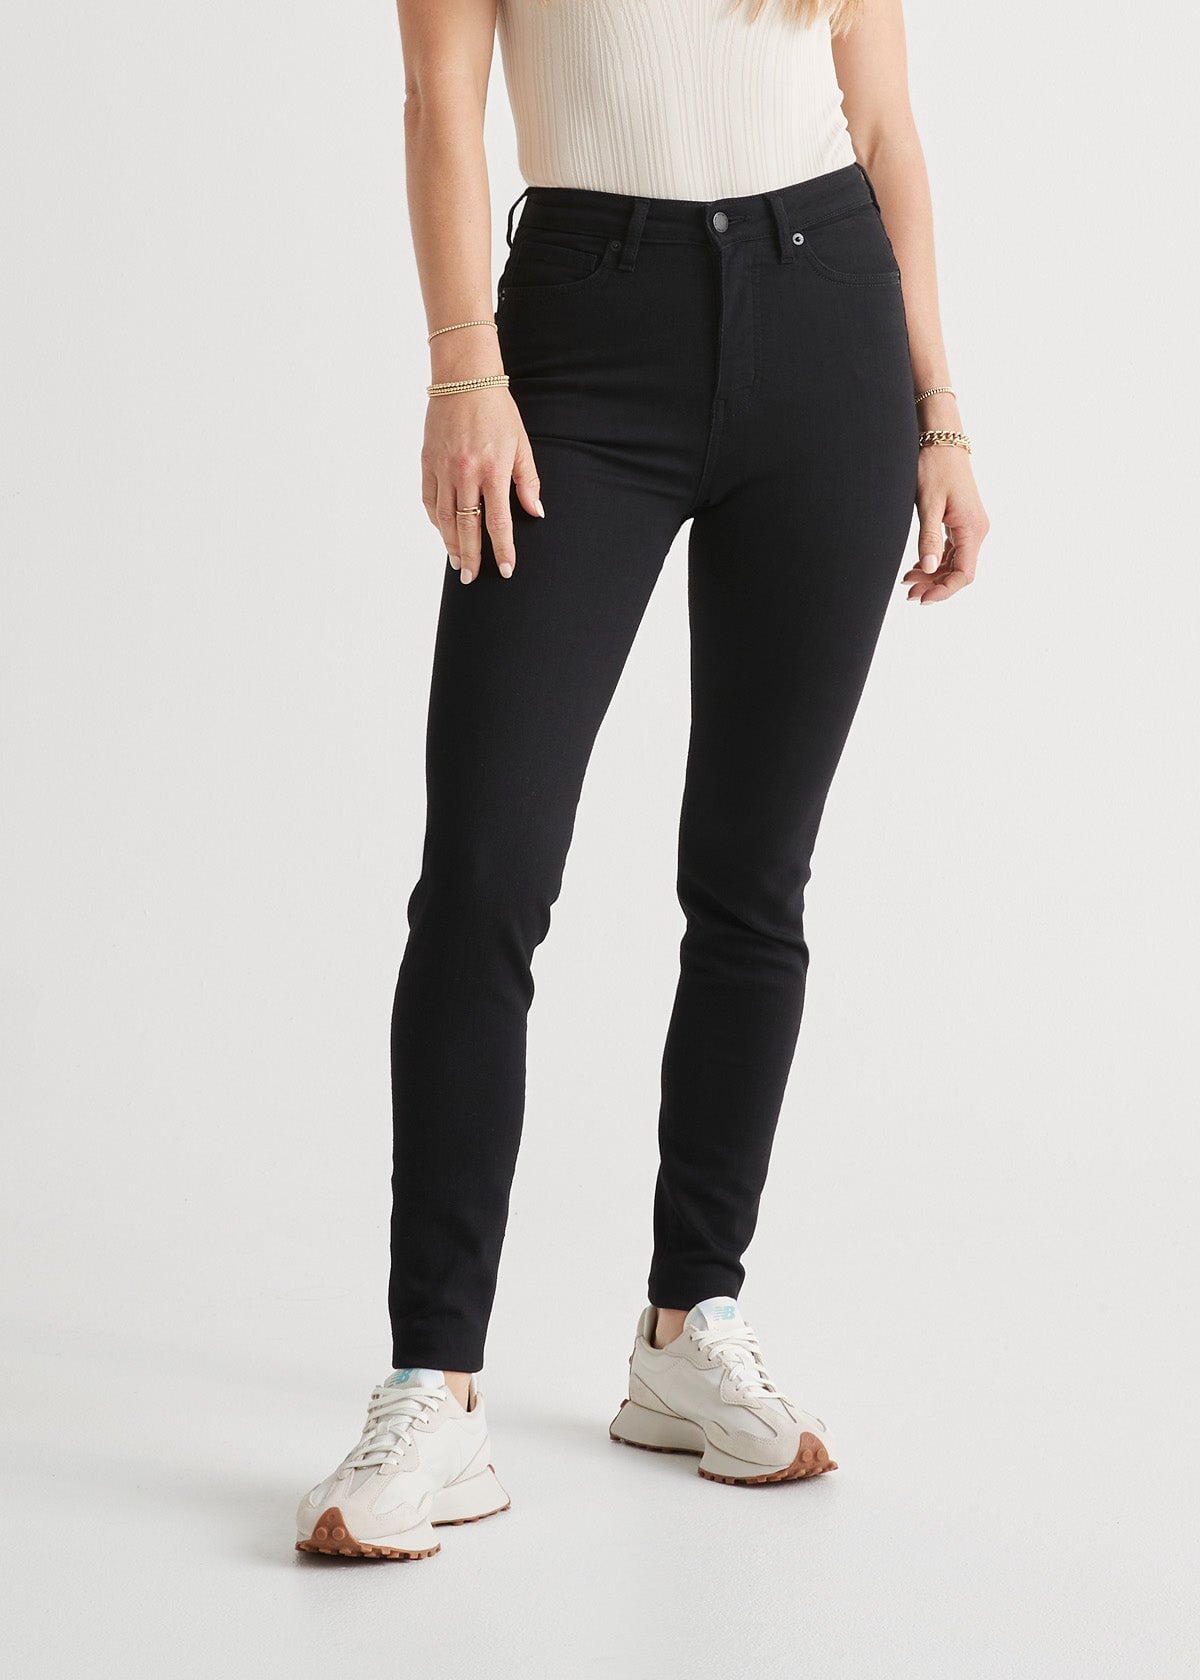 Women\'s High Rise Stretch Denim Black Skinny Jean